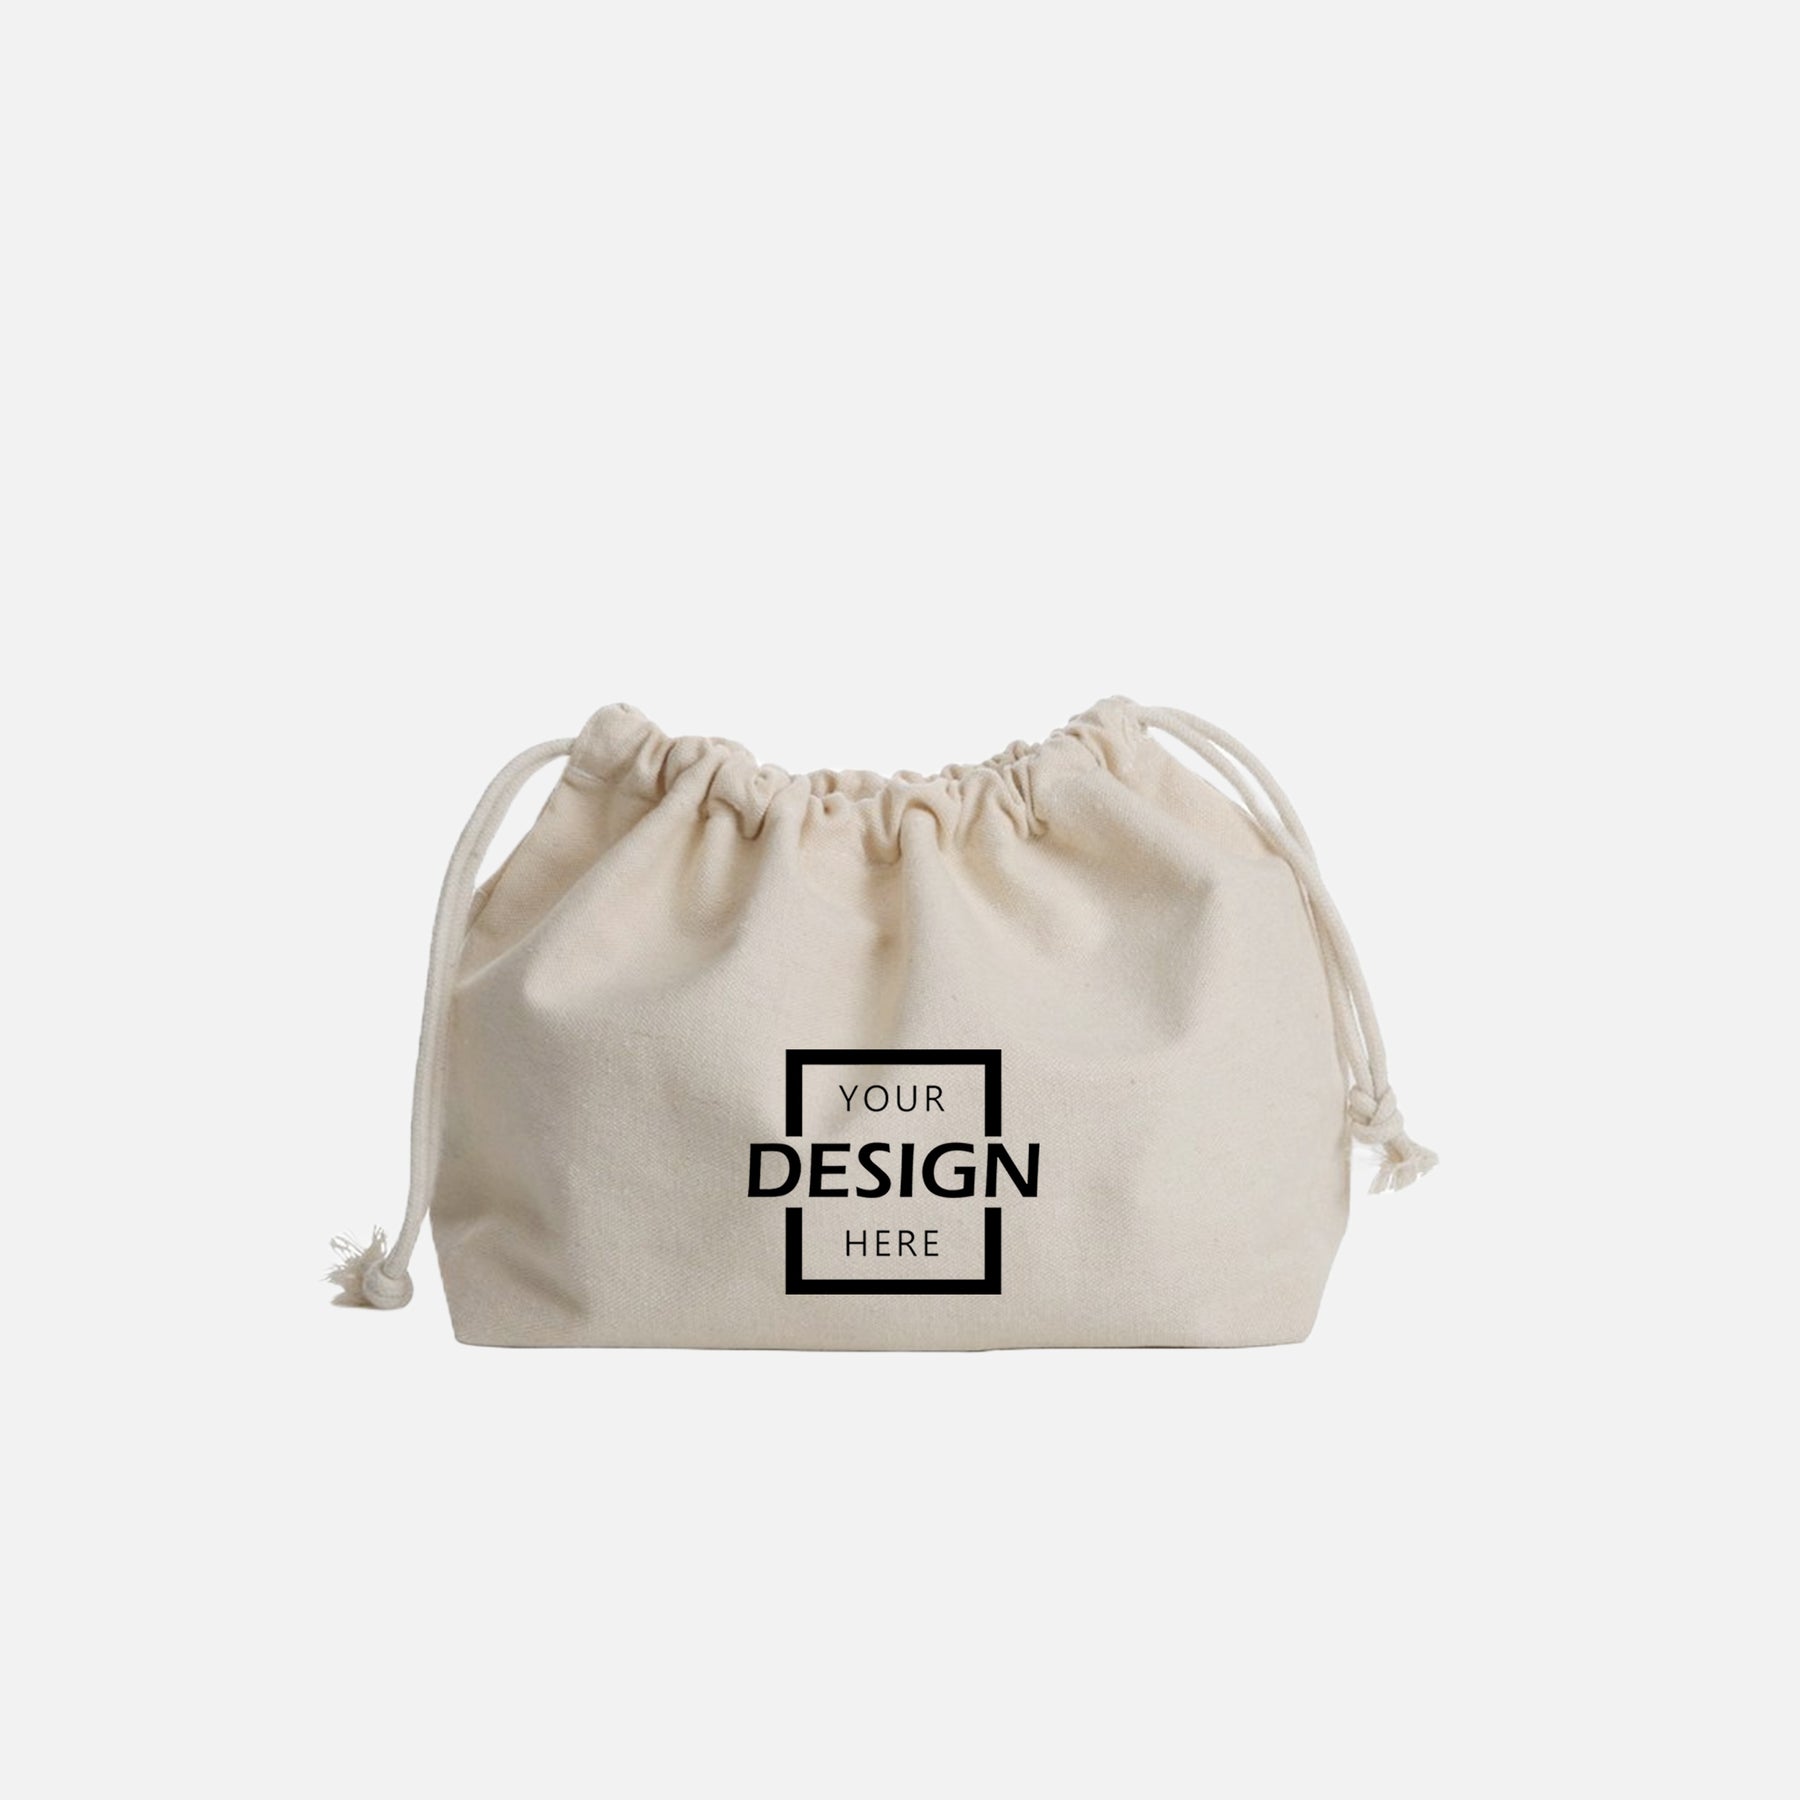 Exhibition Promotional Drawstring Bag | 貿易展會宣傳寬版束繩袋